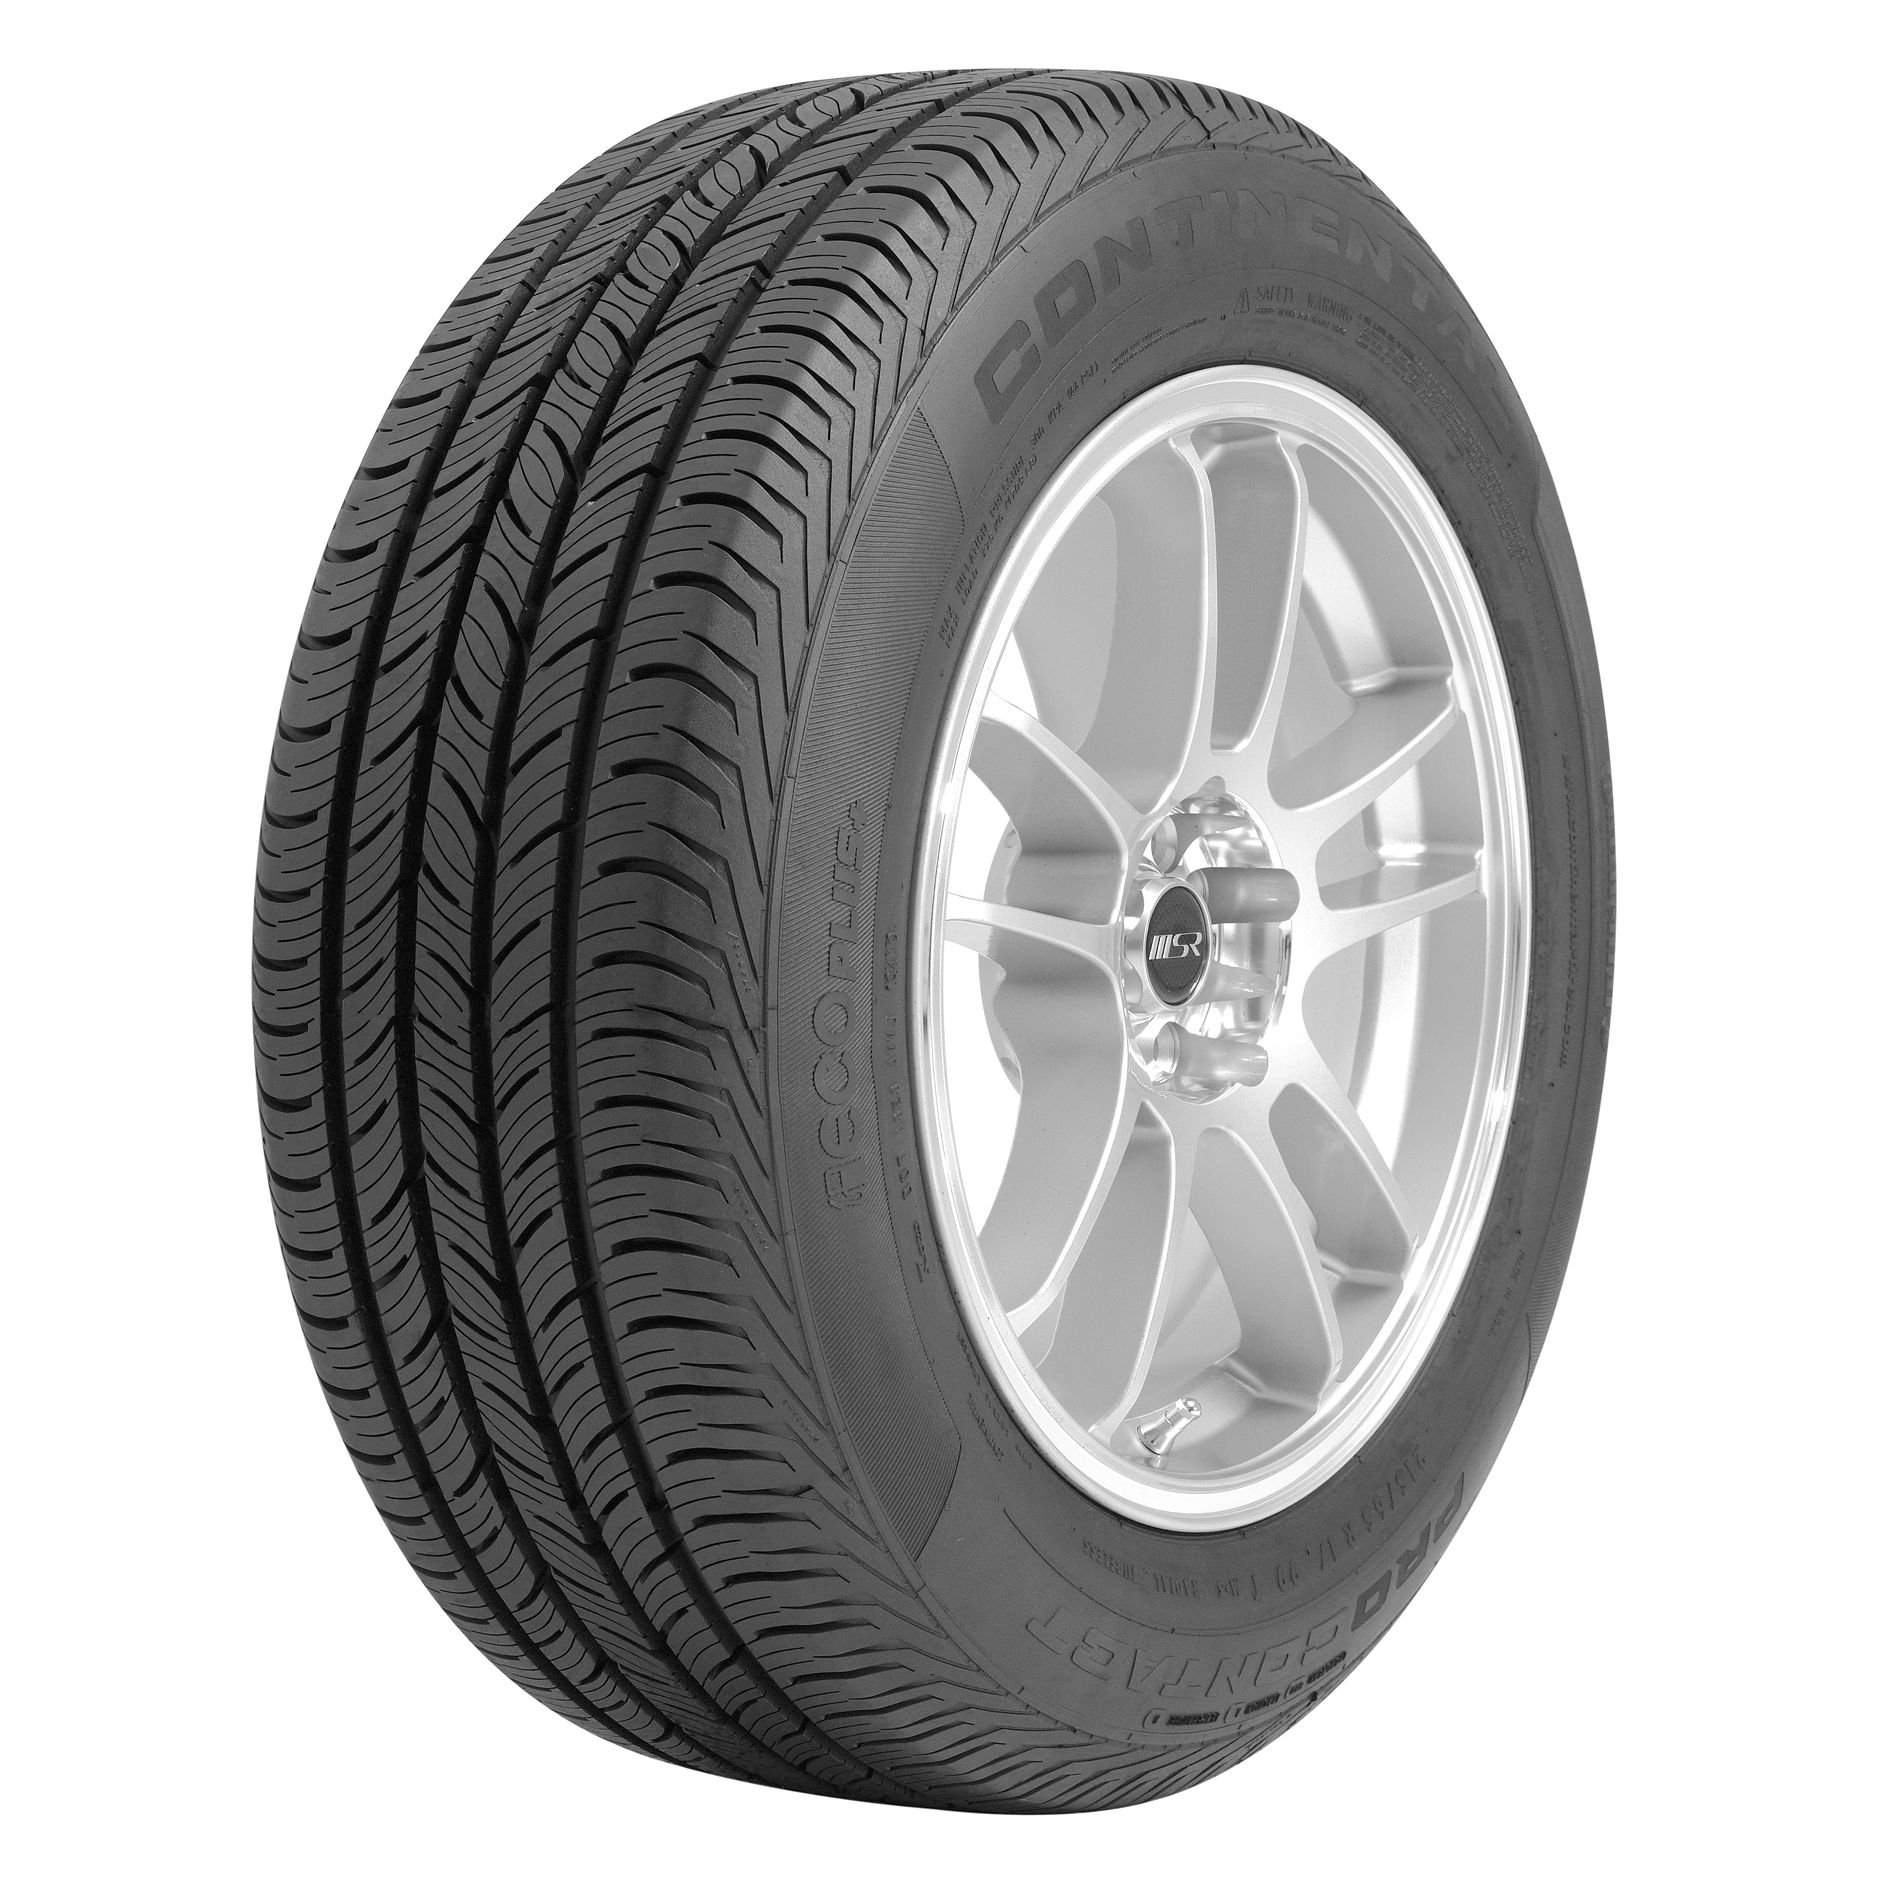 Continental Pro Contact Eco Plus - 225/60R17 99T BW - All-Season Tire